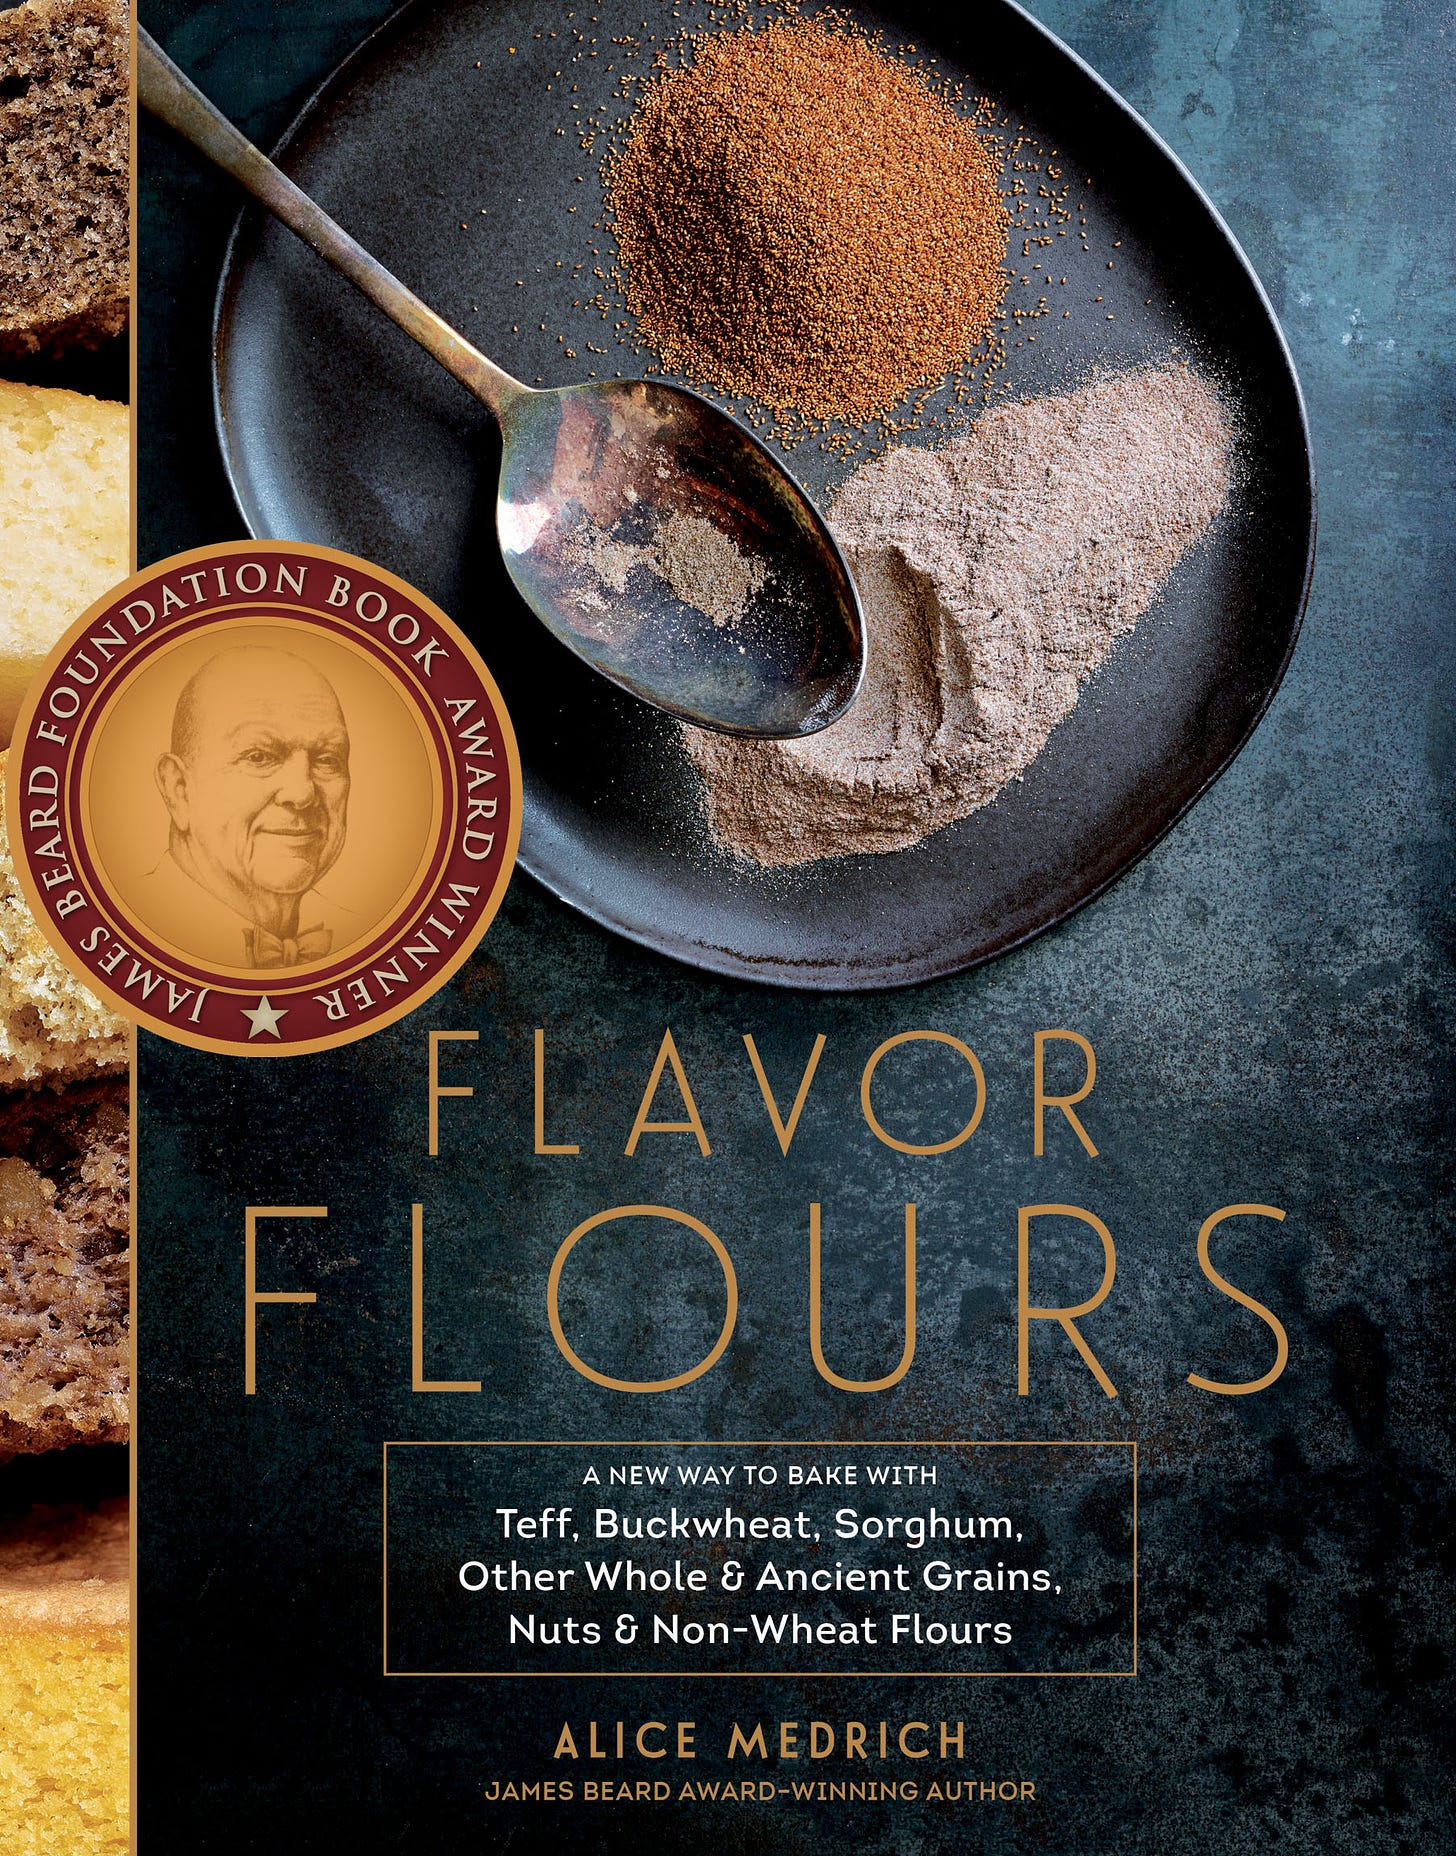 CookThatBook » COOKBOOK REVIEW: Flavor Flours